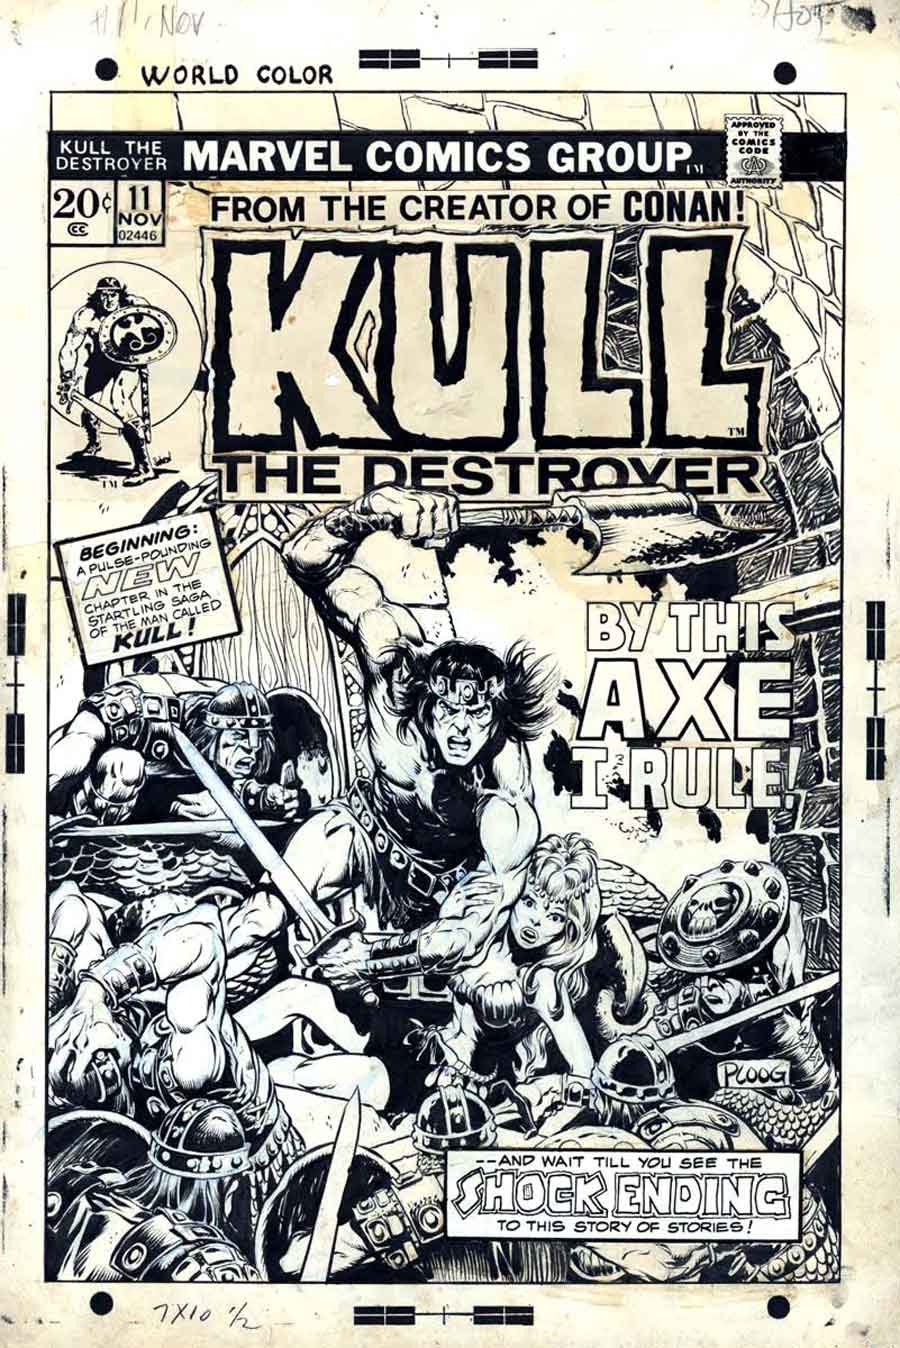 Mike Ploog bronze age marvel 1970s original comic book cover artwork - Kull #11